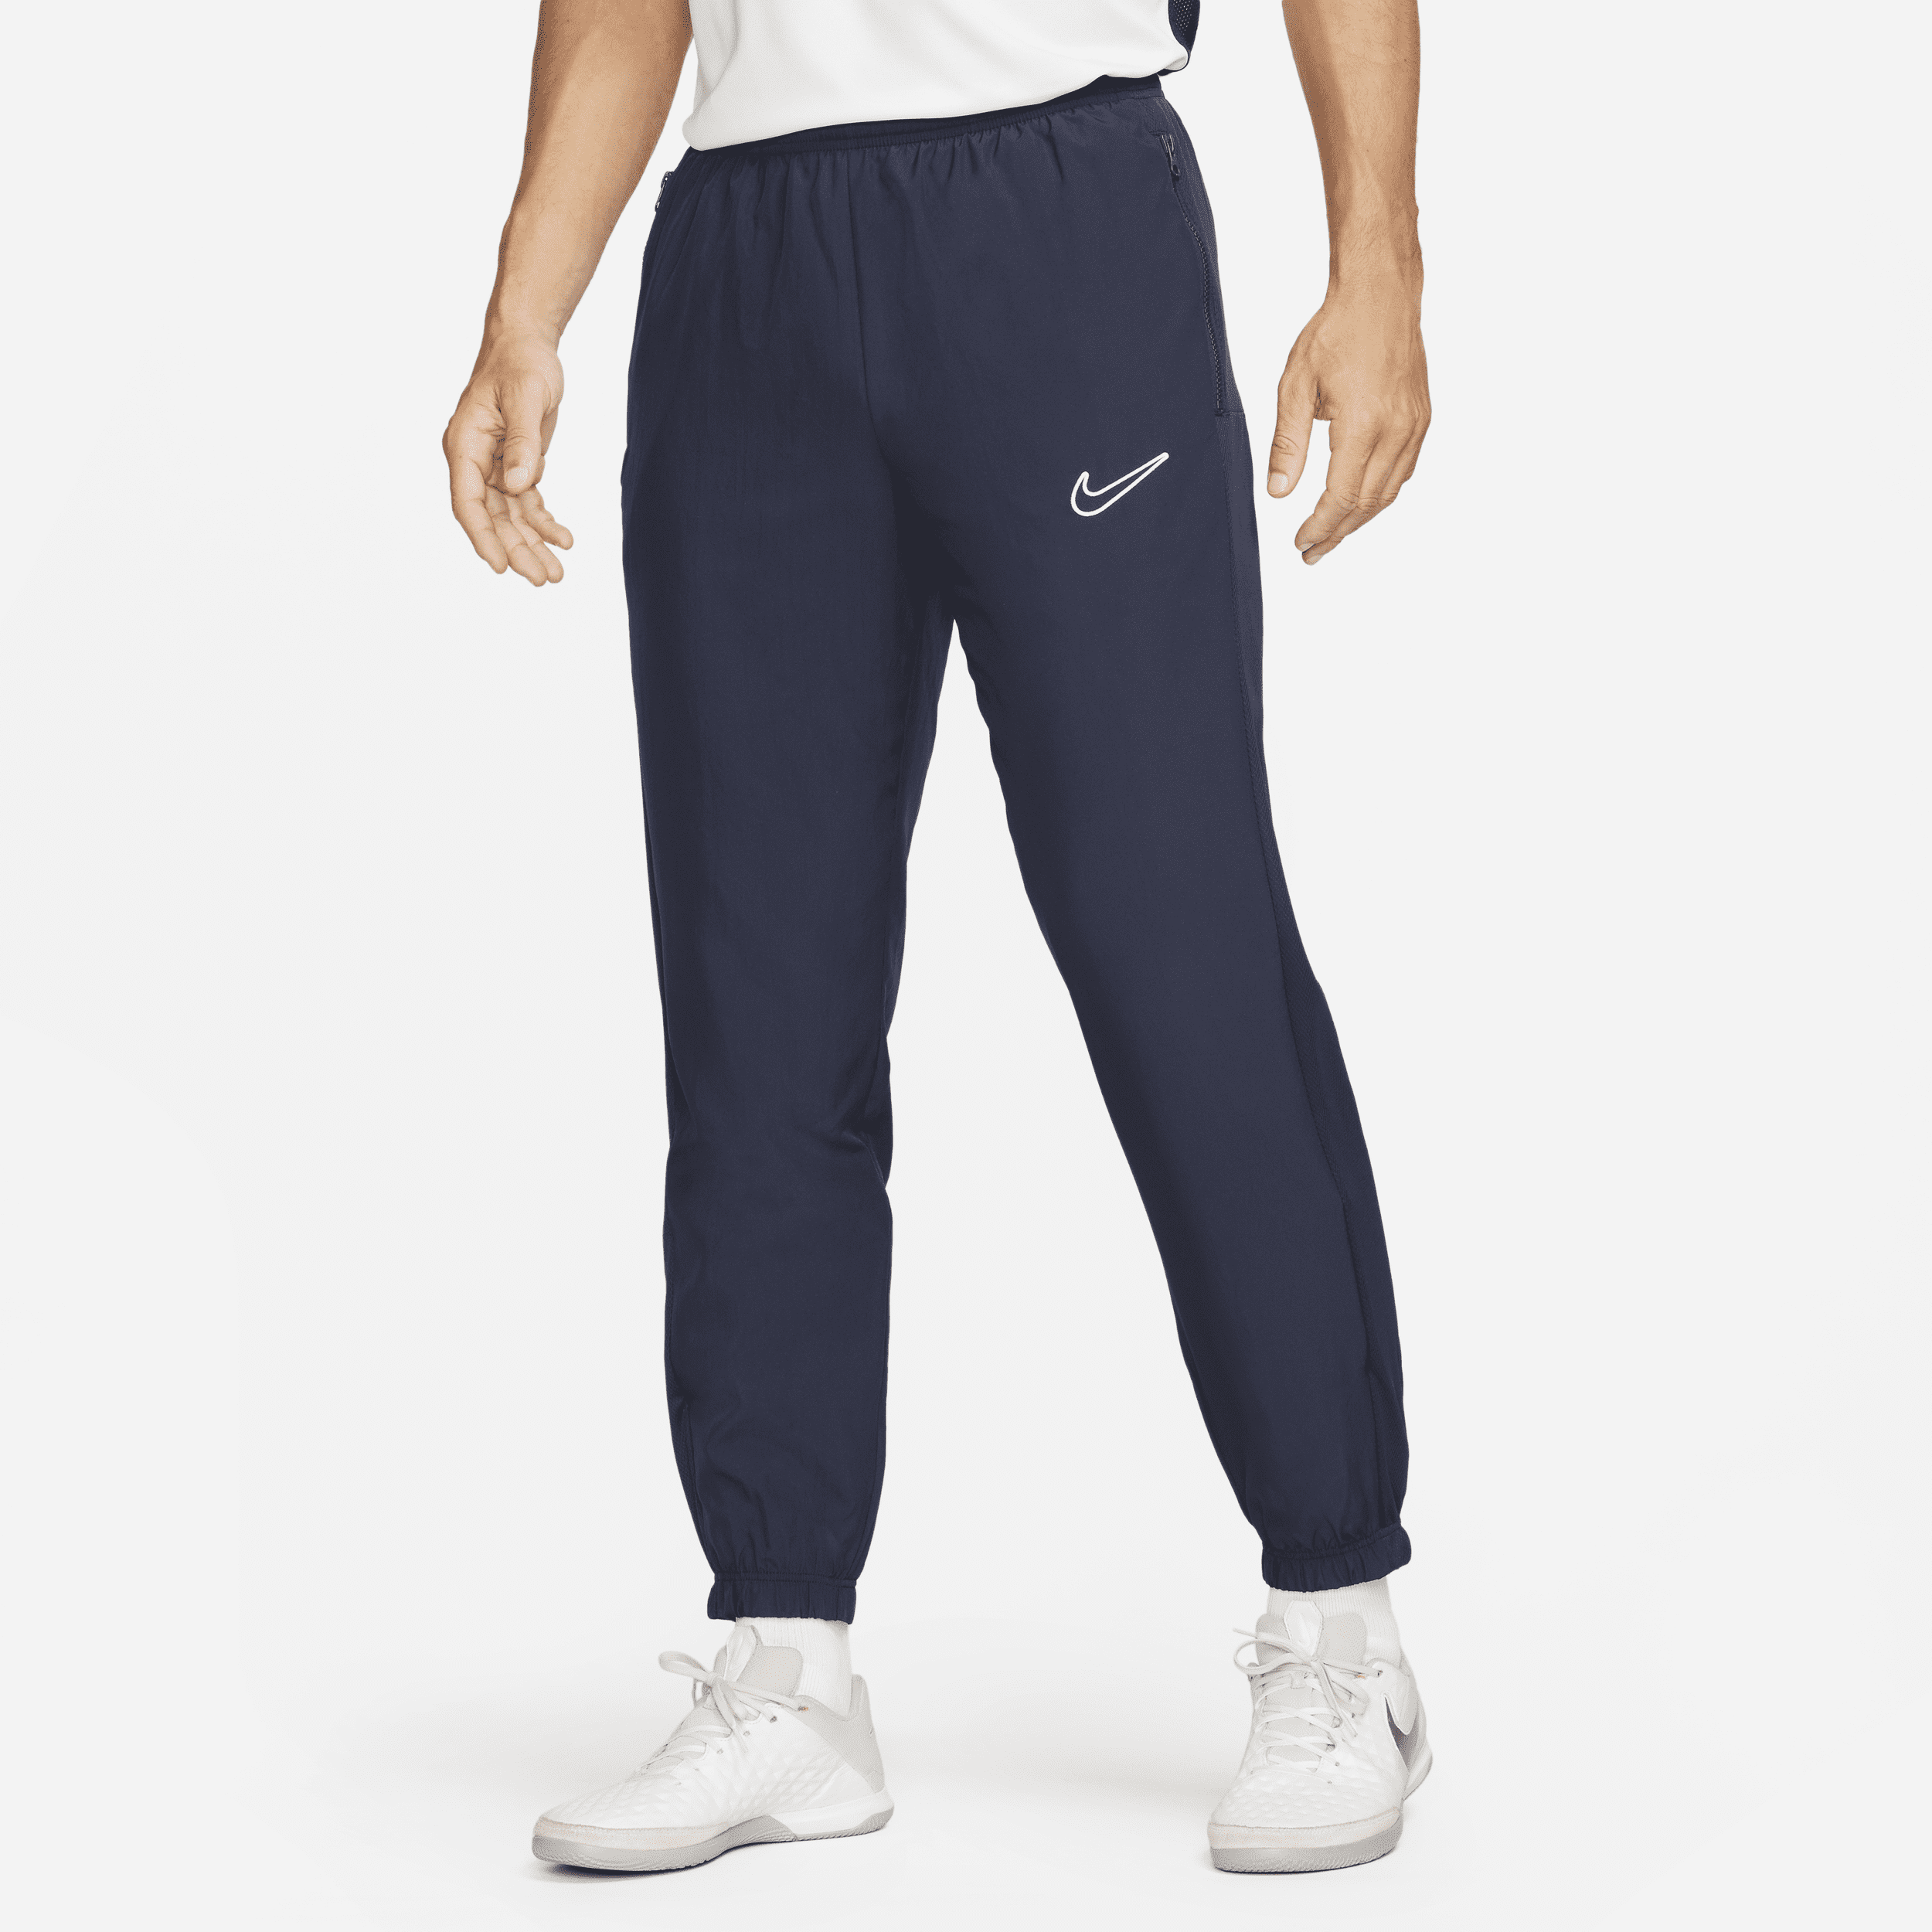 Pantaloni da calcio Dri-FIT Nike Academy – Uomo - Blu